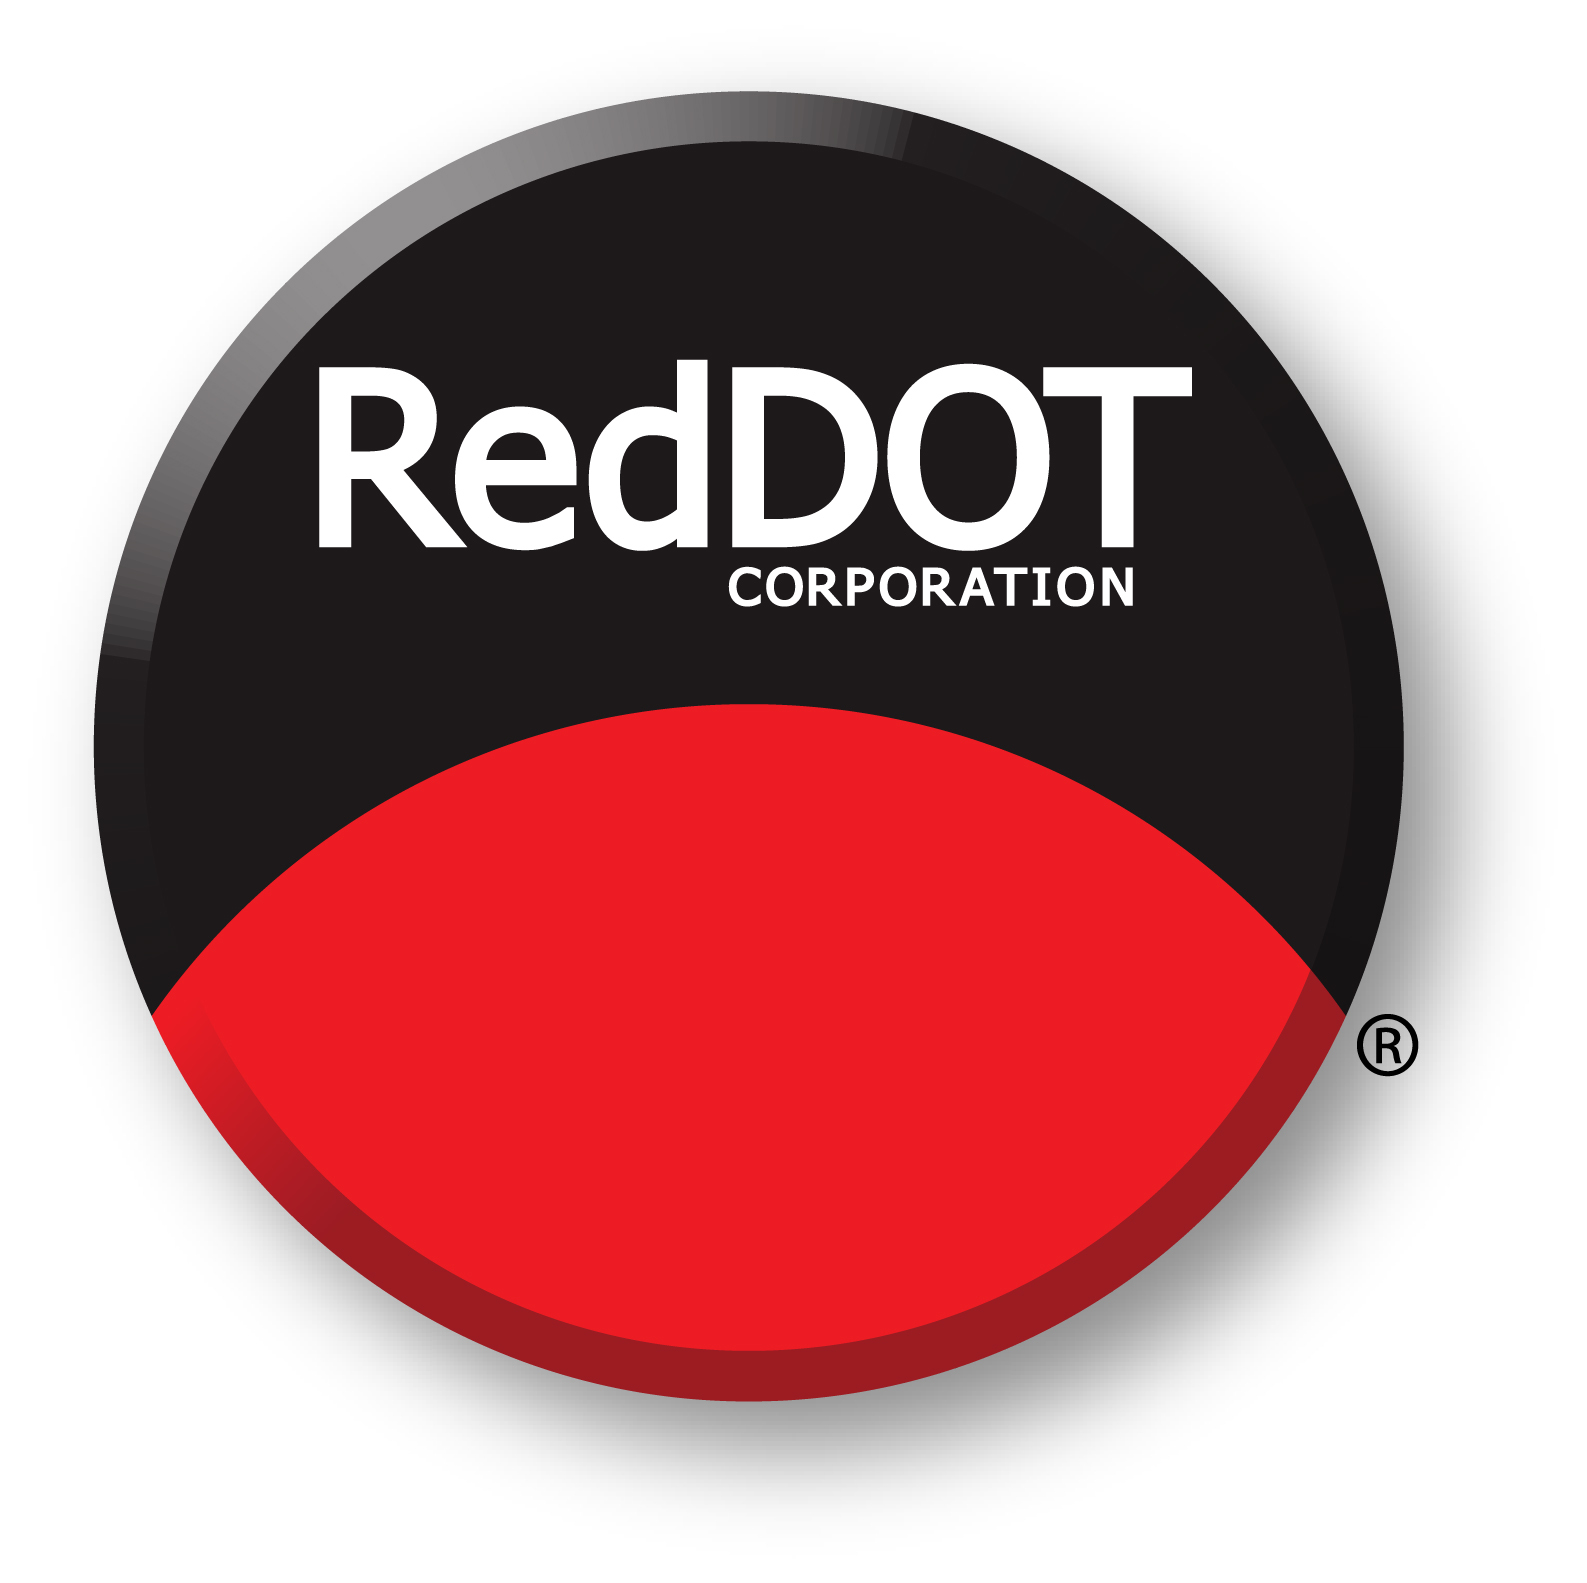 Red Dot Selects CFO Nick Janus as New Company President.